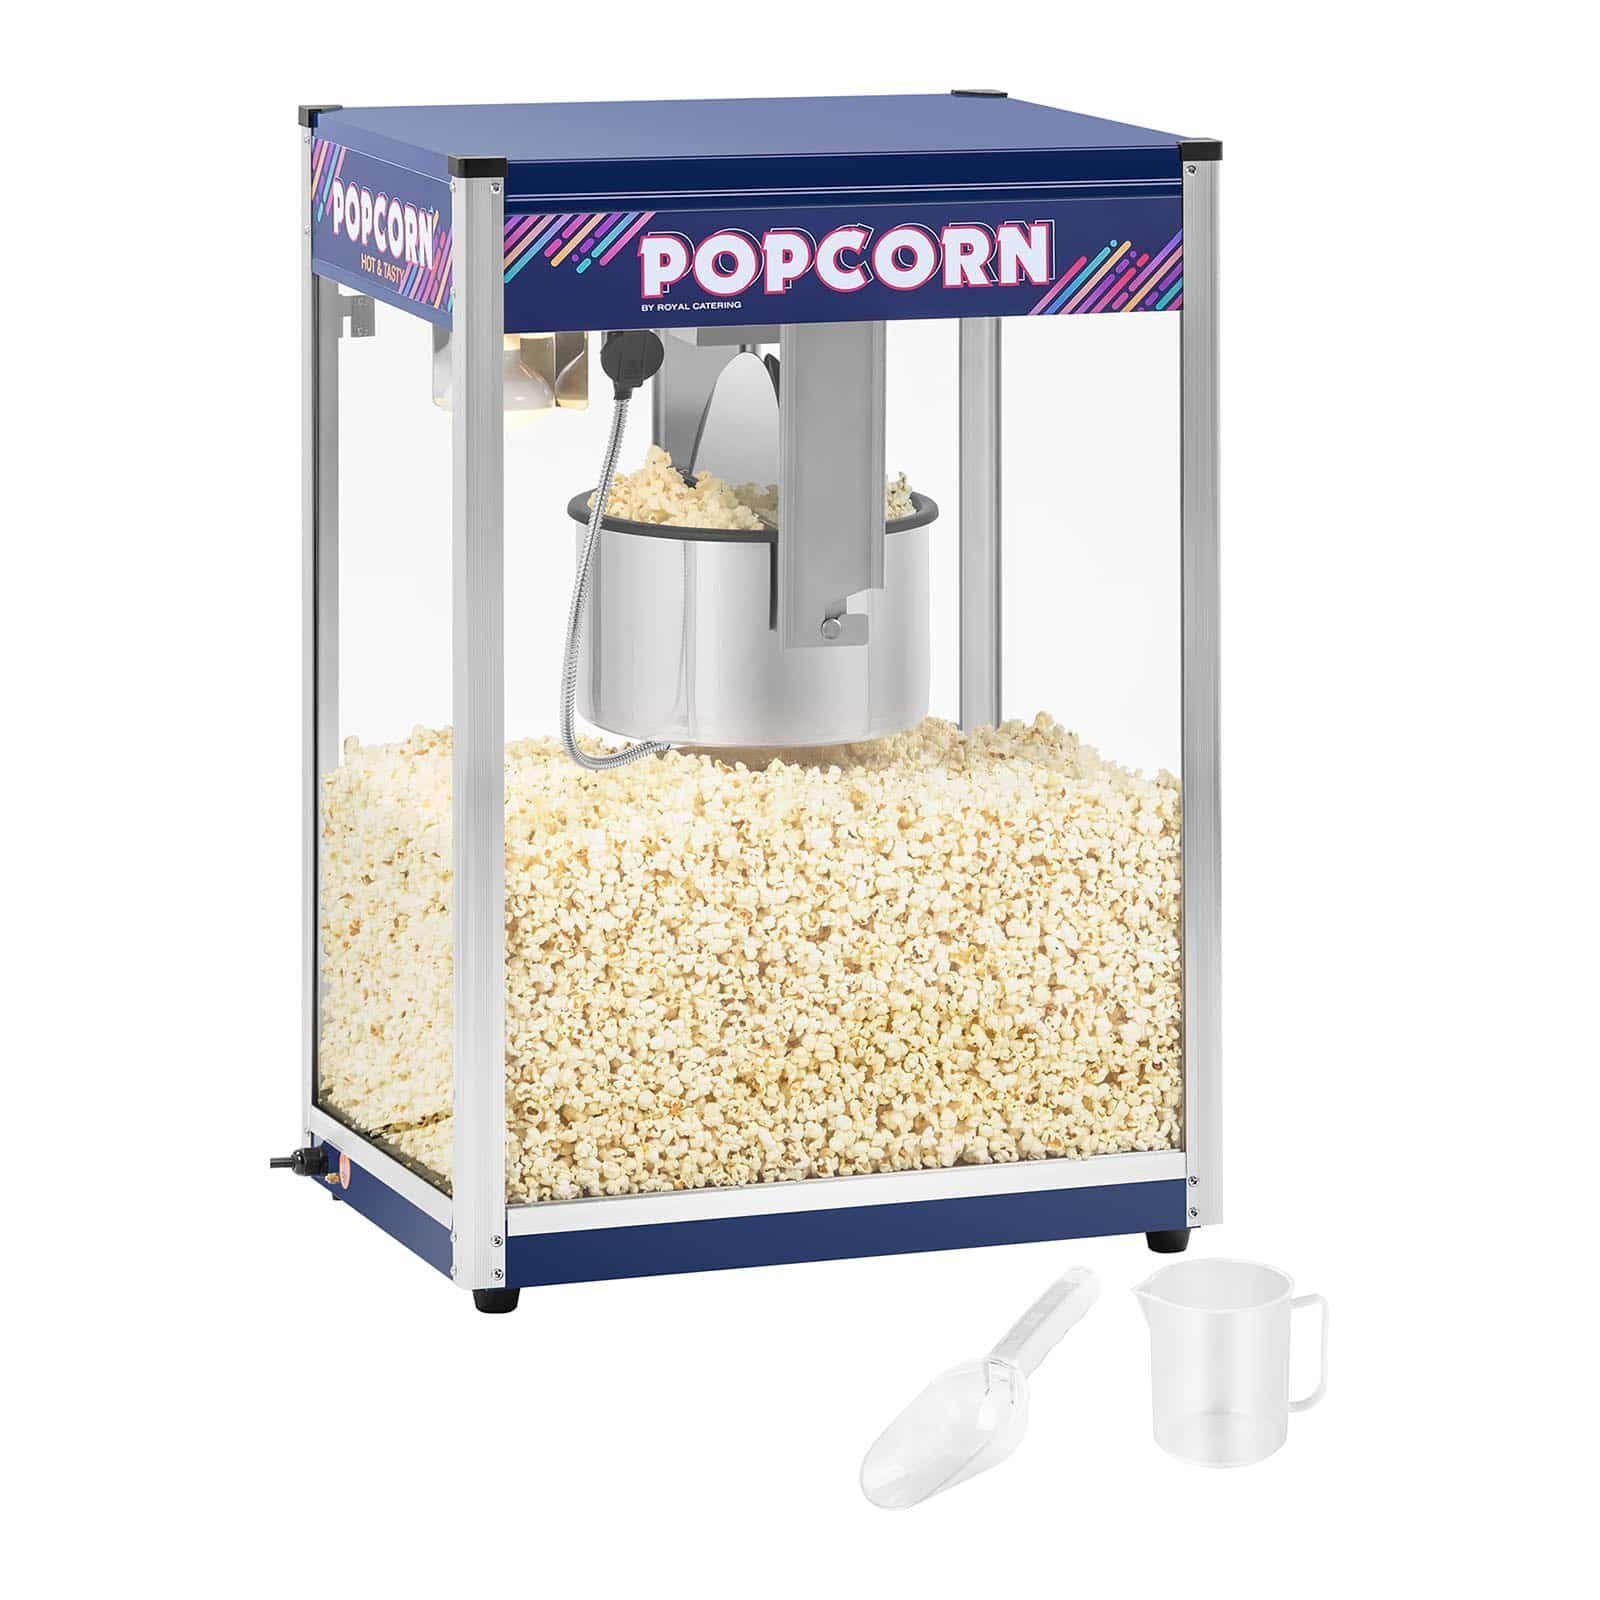 Maker Popcorn Popcornmaschine Royal Catering Maschine Popcornautomat Popcornmaker Popcornmaschine